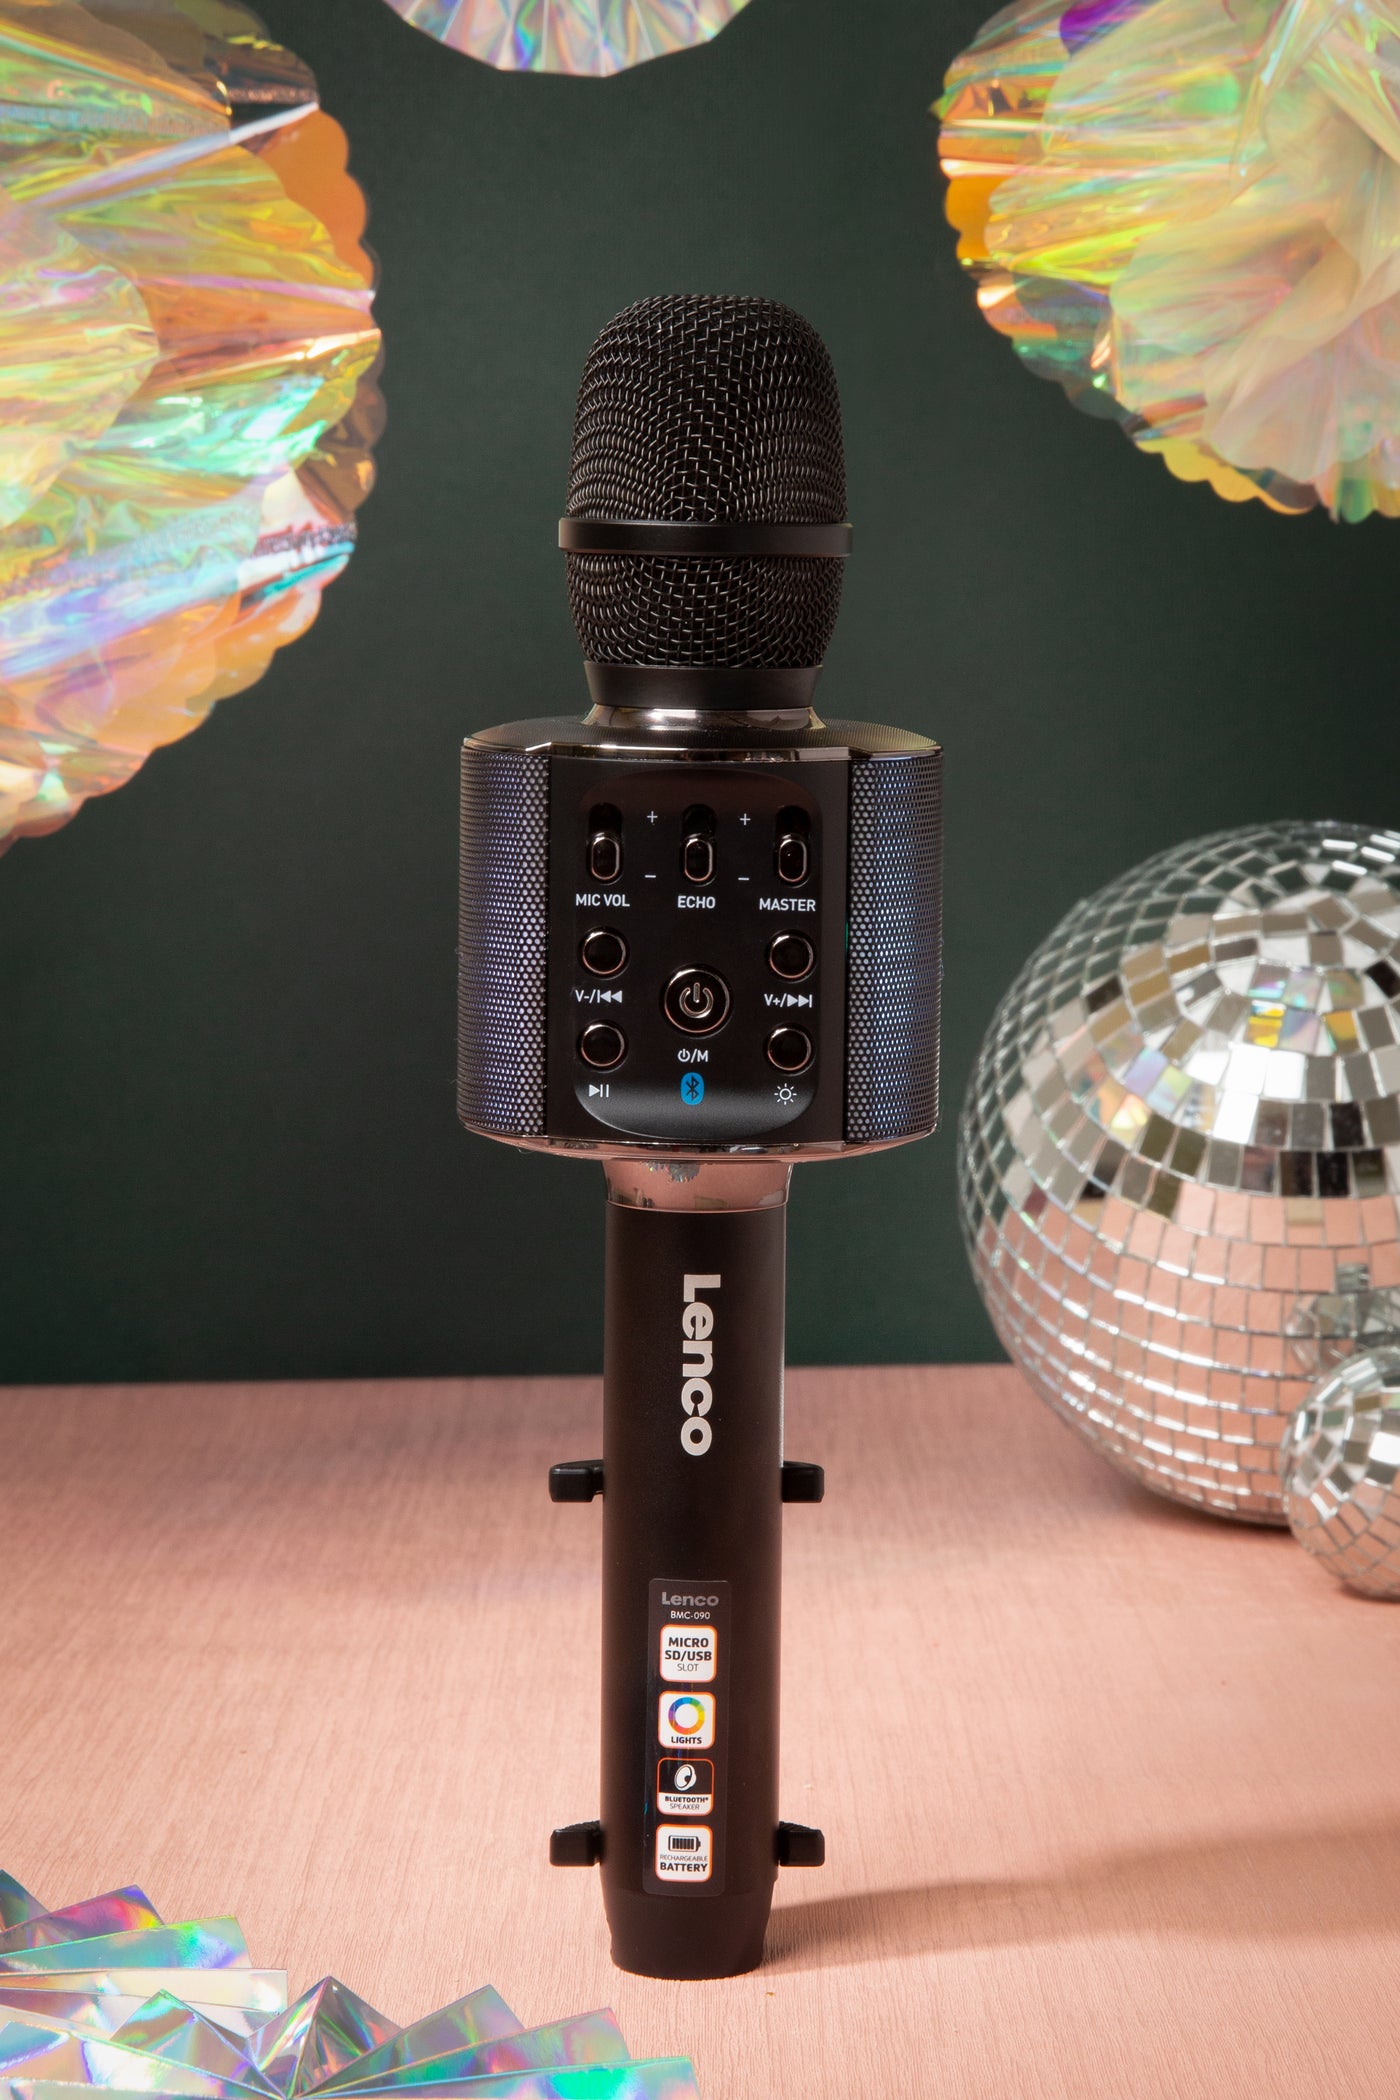 LENCO BMC-090BK - Bluetooth® Karaoke microphone with speaker & lighting - Black